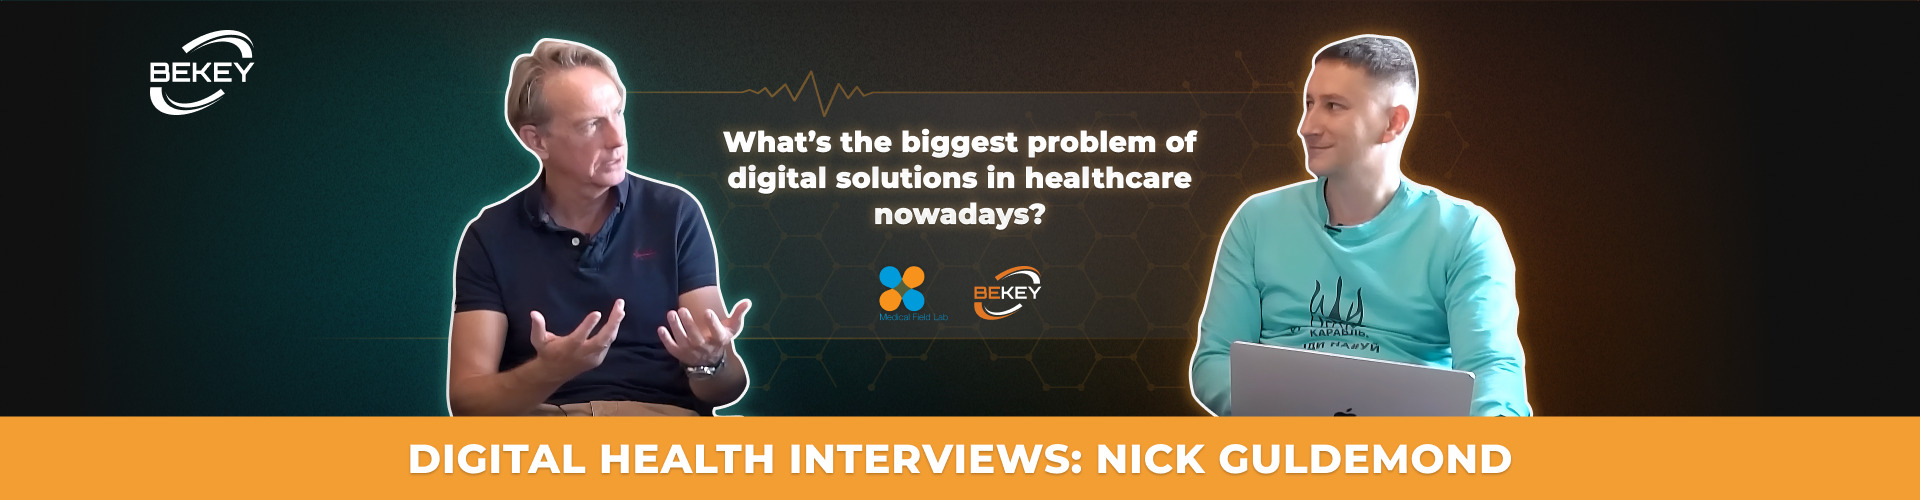 The Biggest Problem of Digital Solutions in Healthcare. Digital Health Interviews: Nick Guldemond - image